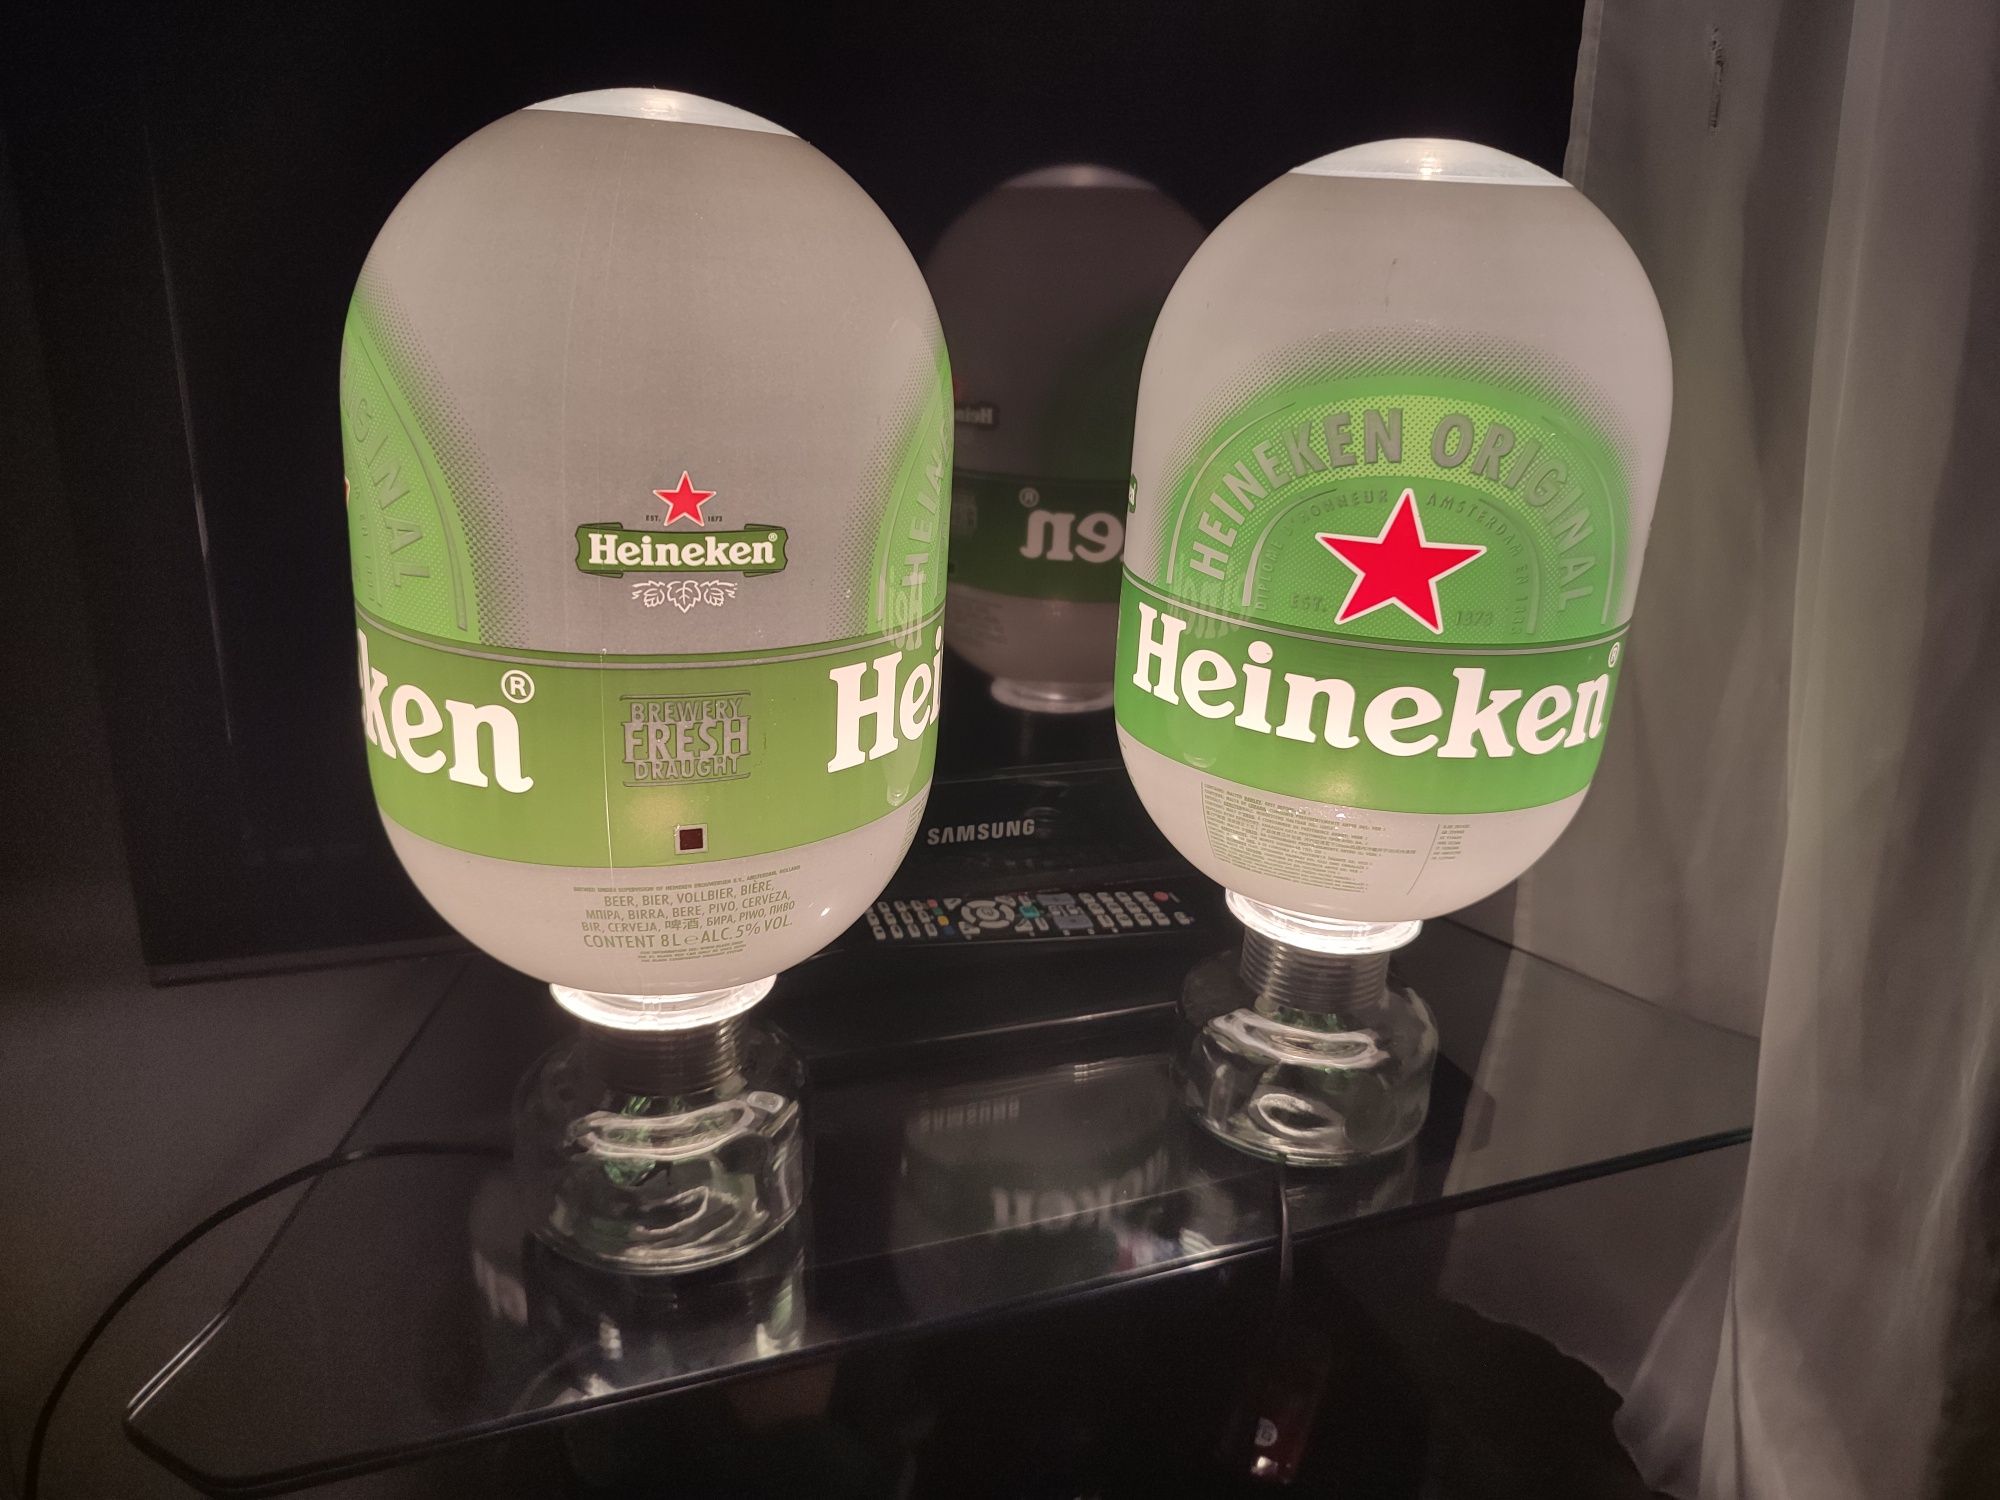 Candeeiros cerveja Heineken